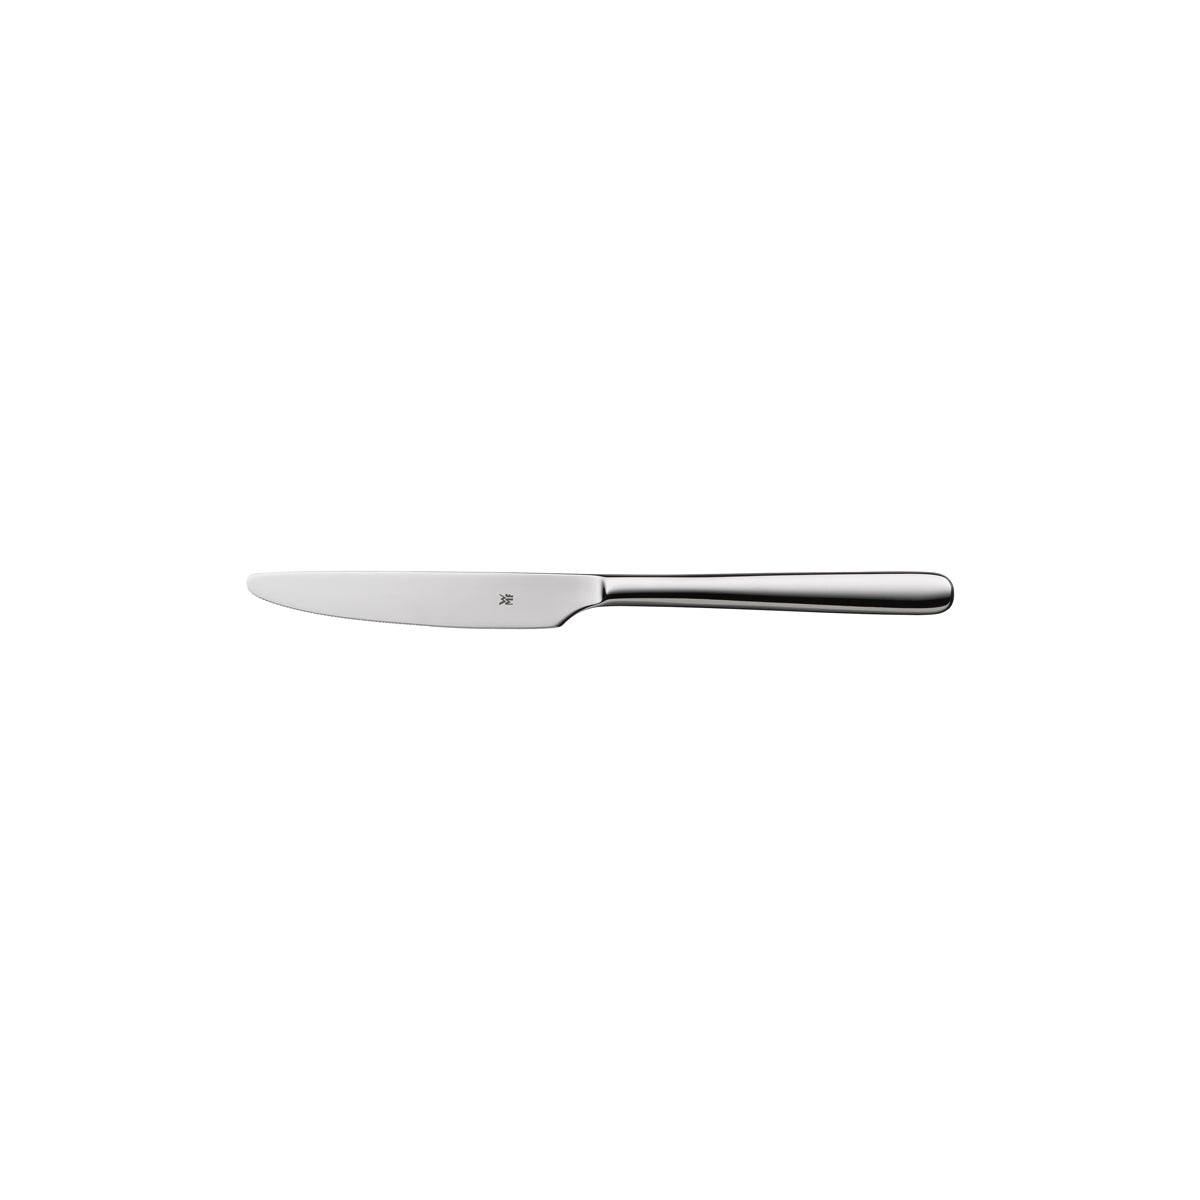 Wmf Scala Dessert Knife 18/10 210mm: Pack of 12